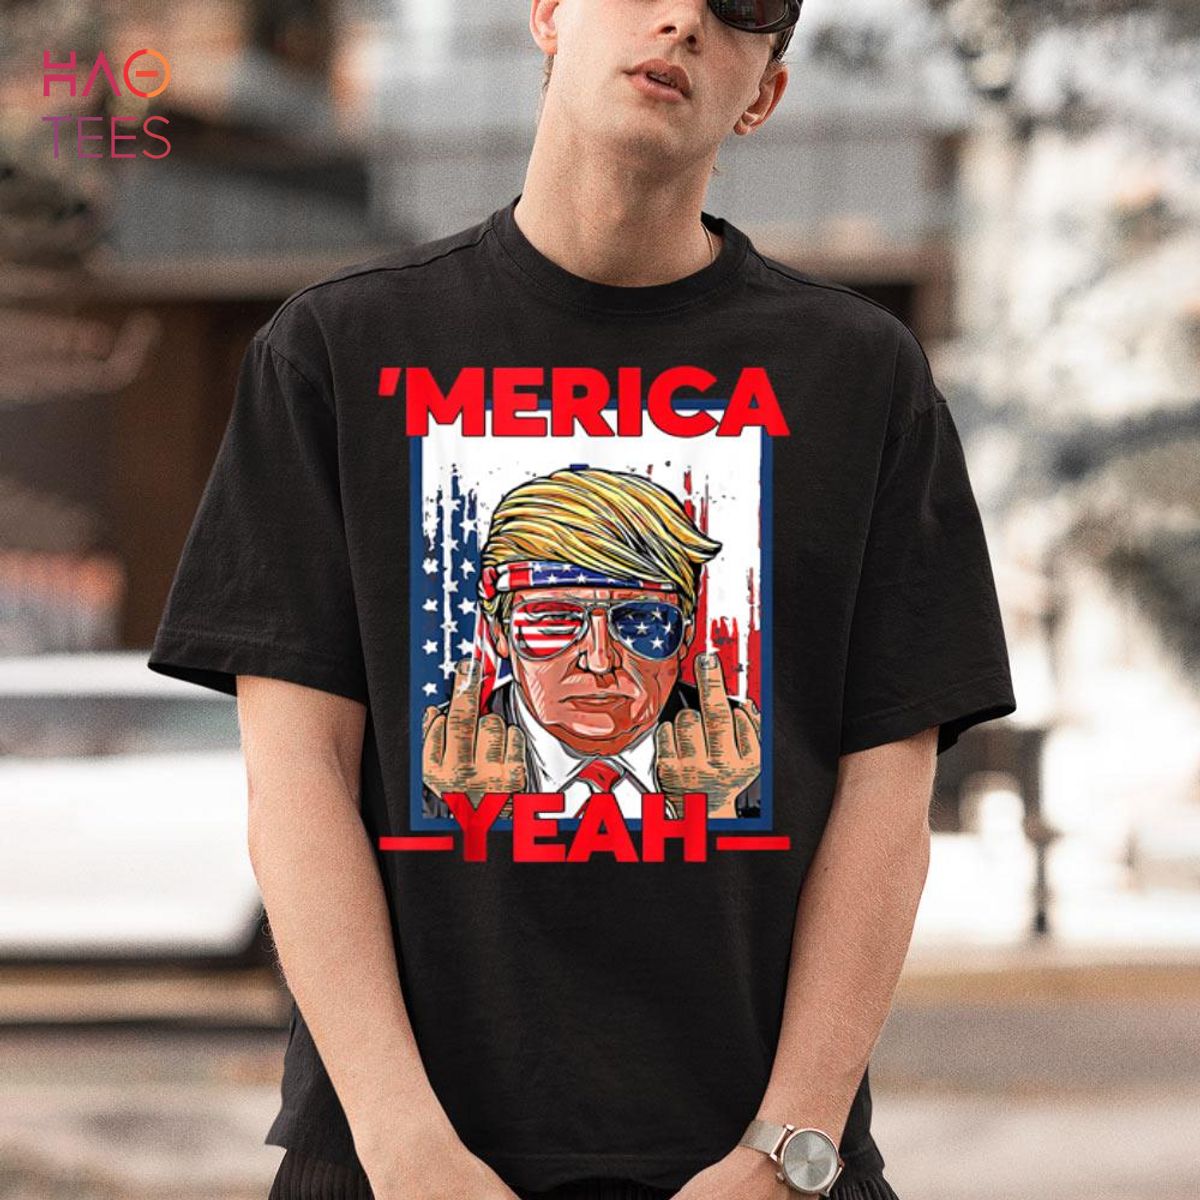 Funny 4th of July Patriotic Donald Trump 'Merica USA Flag Shirt